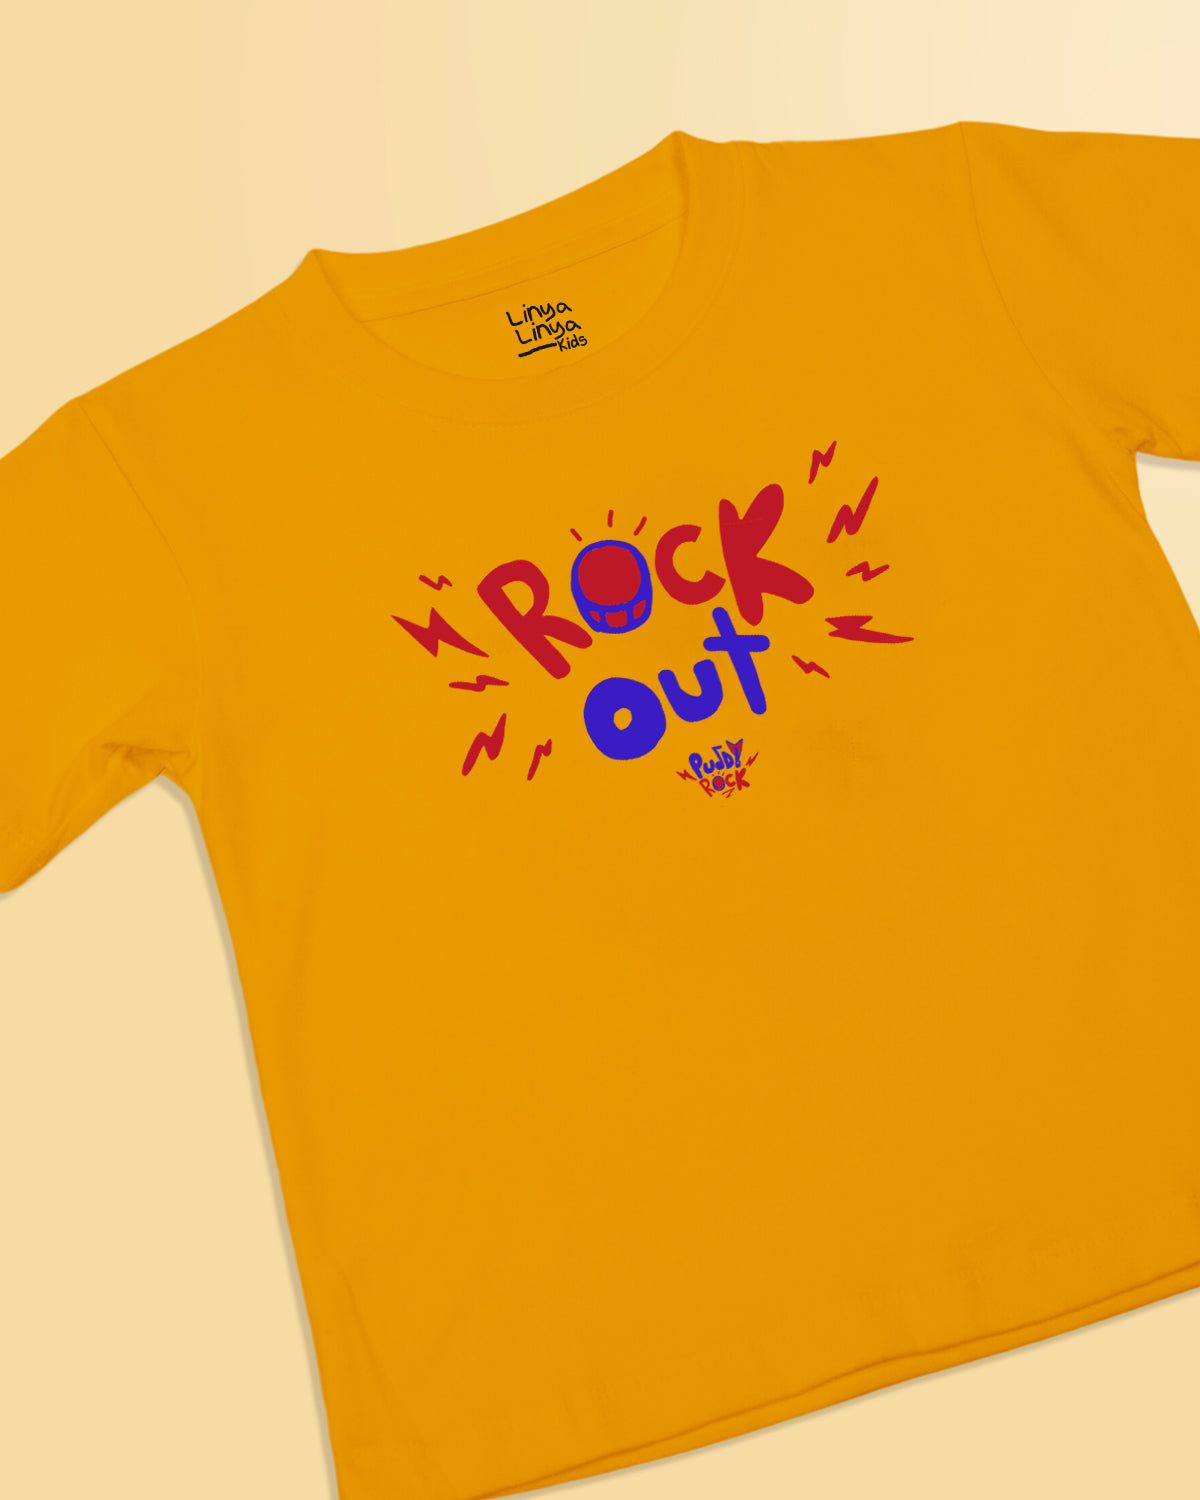 Puddy Rock Kids T-Shirt: Rock Out!